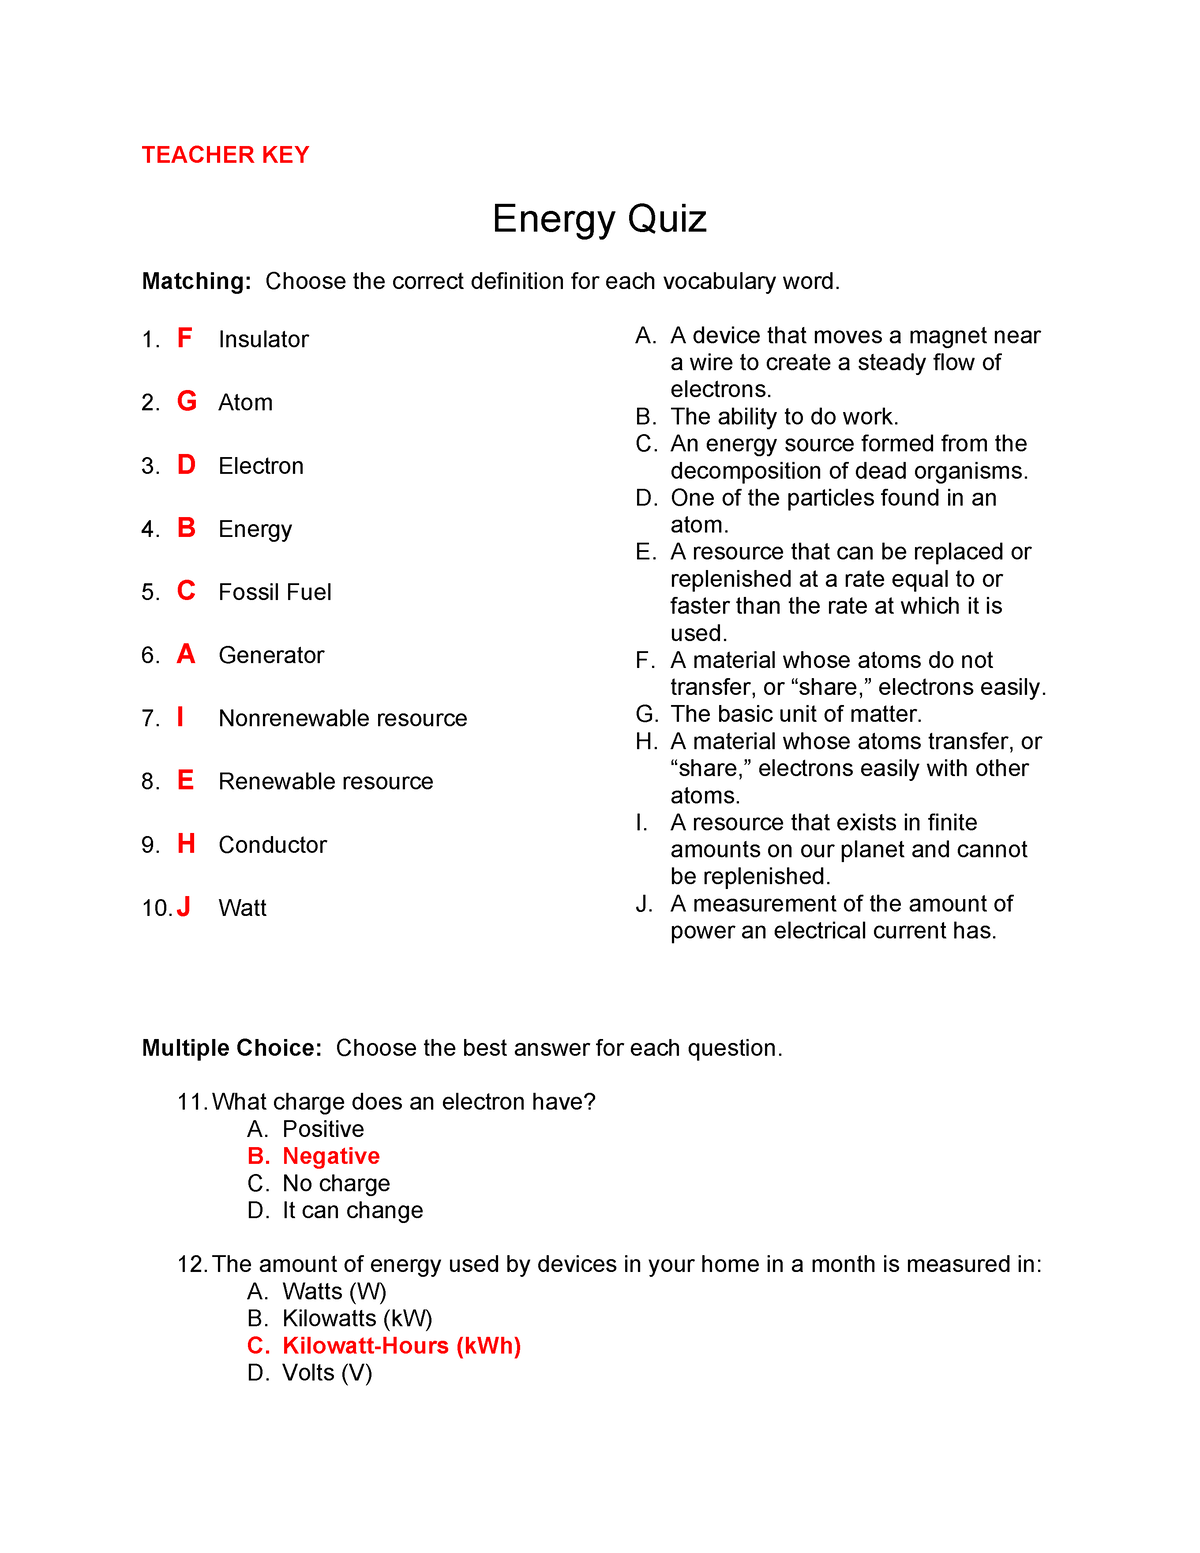 Energy Quiz Key 2 - Additional Notes for Learning - TEACHER KEY Energy ...